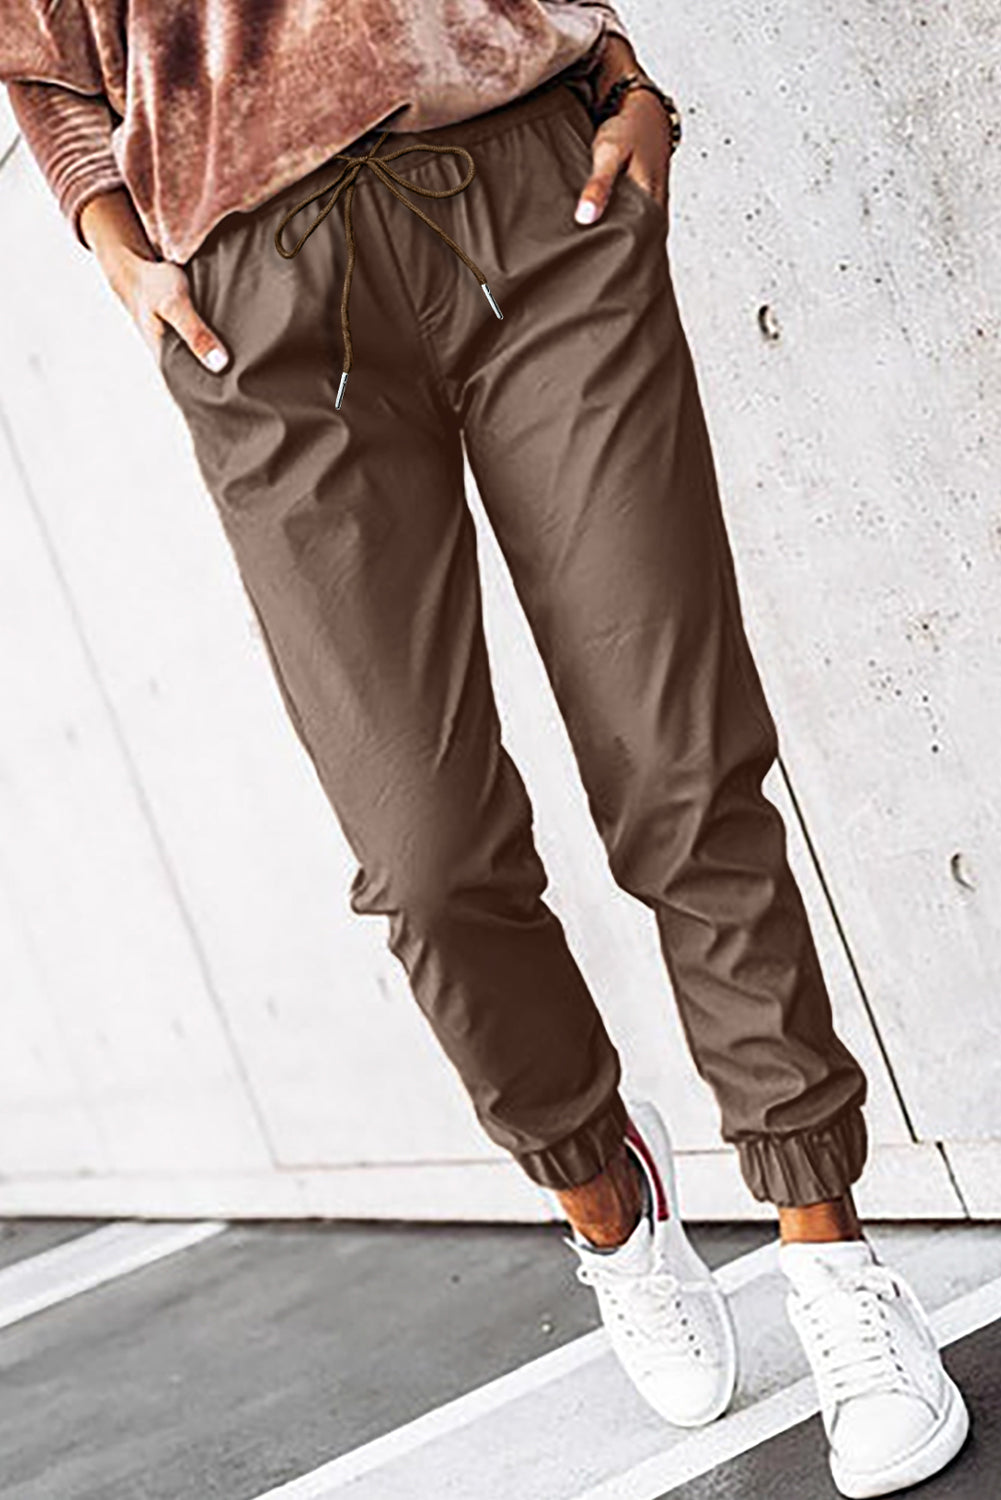 Brown Leather Tie Waist Jogger Womens Pants - US2EInc Apparel Plug Ltd. Co